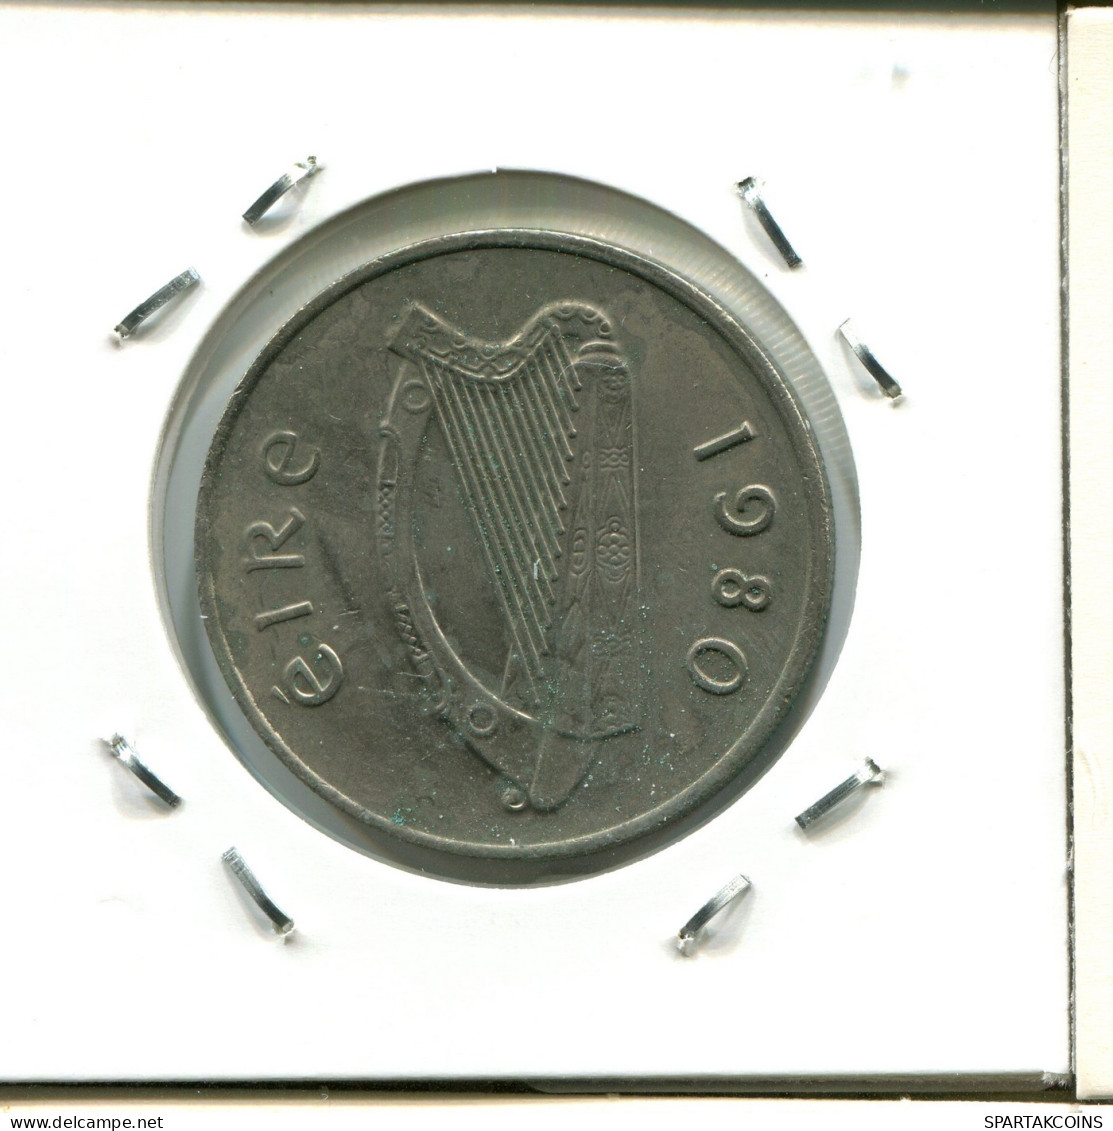 10 DRACHMES 1980 GRECIA GREECE Moneda #AW686.E.A - Grèce